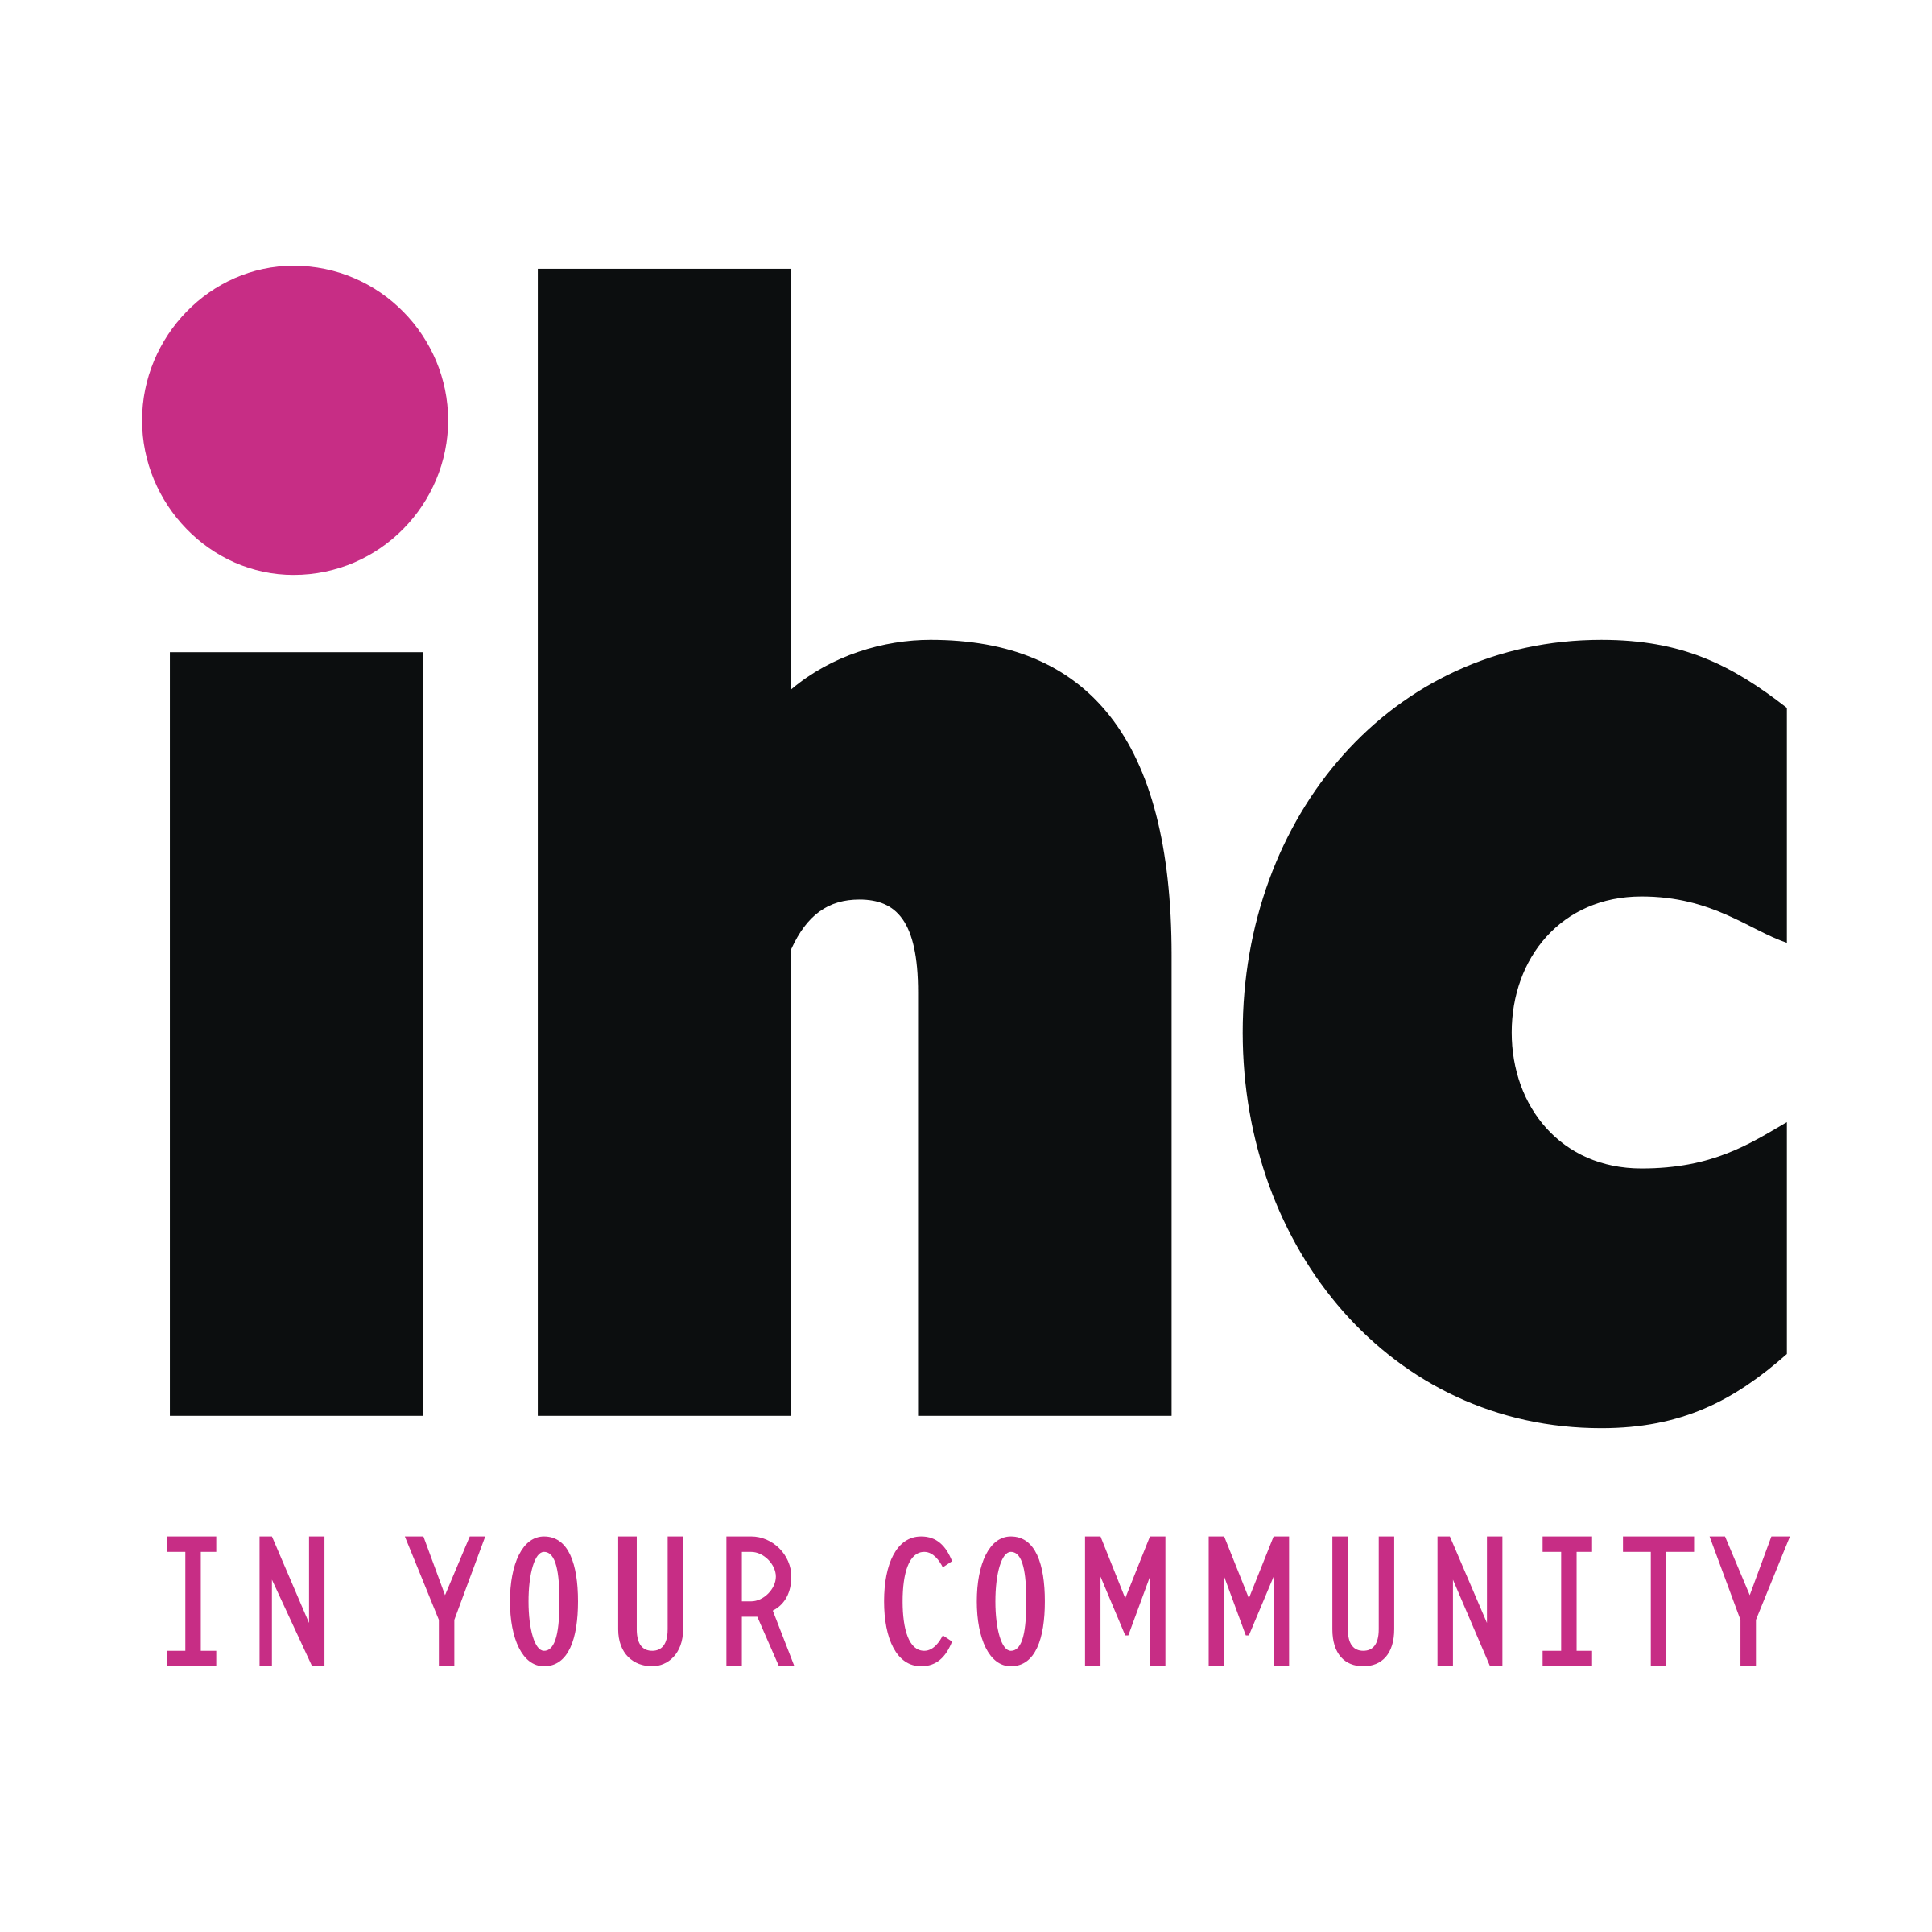 IHC Logo - IHC Logo PNG Transparent & SVG Vector